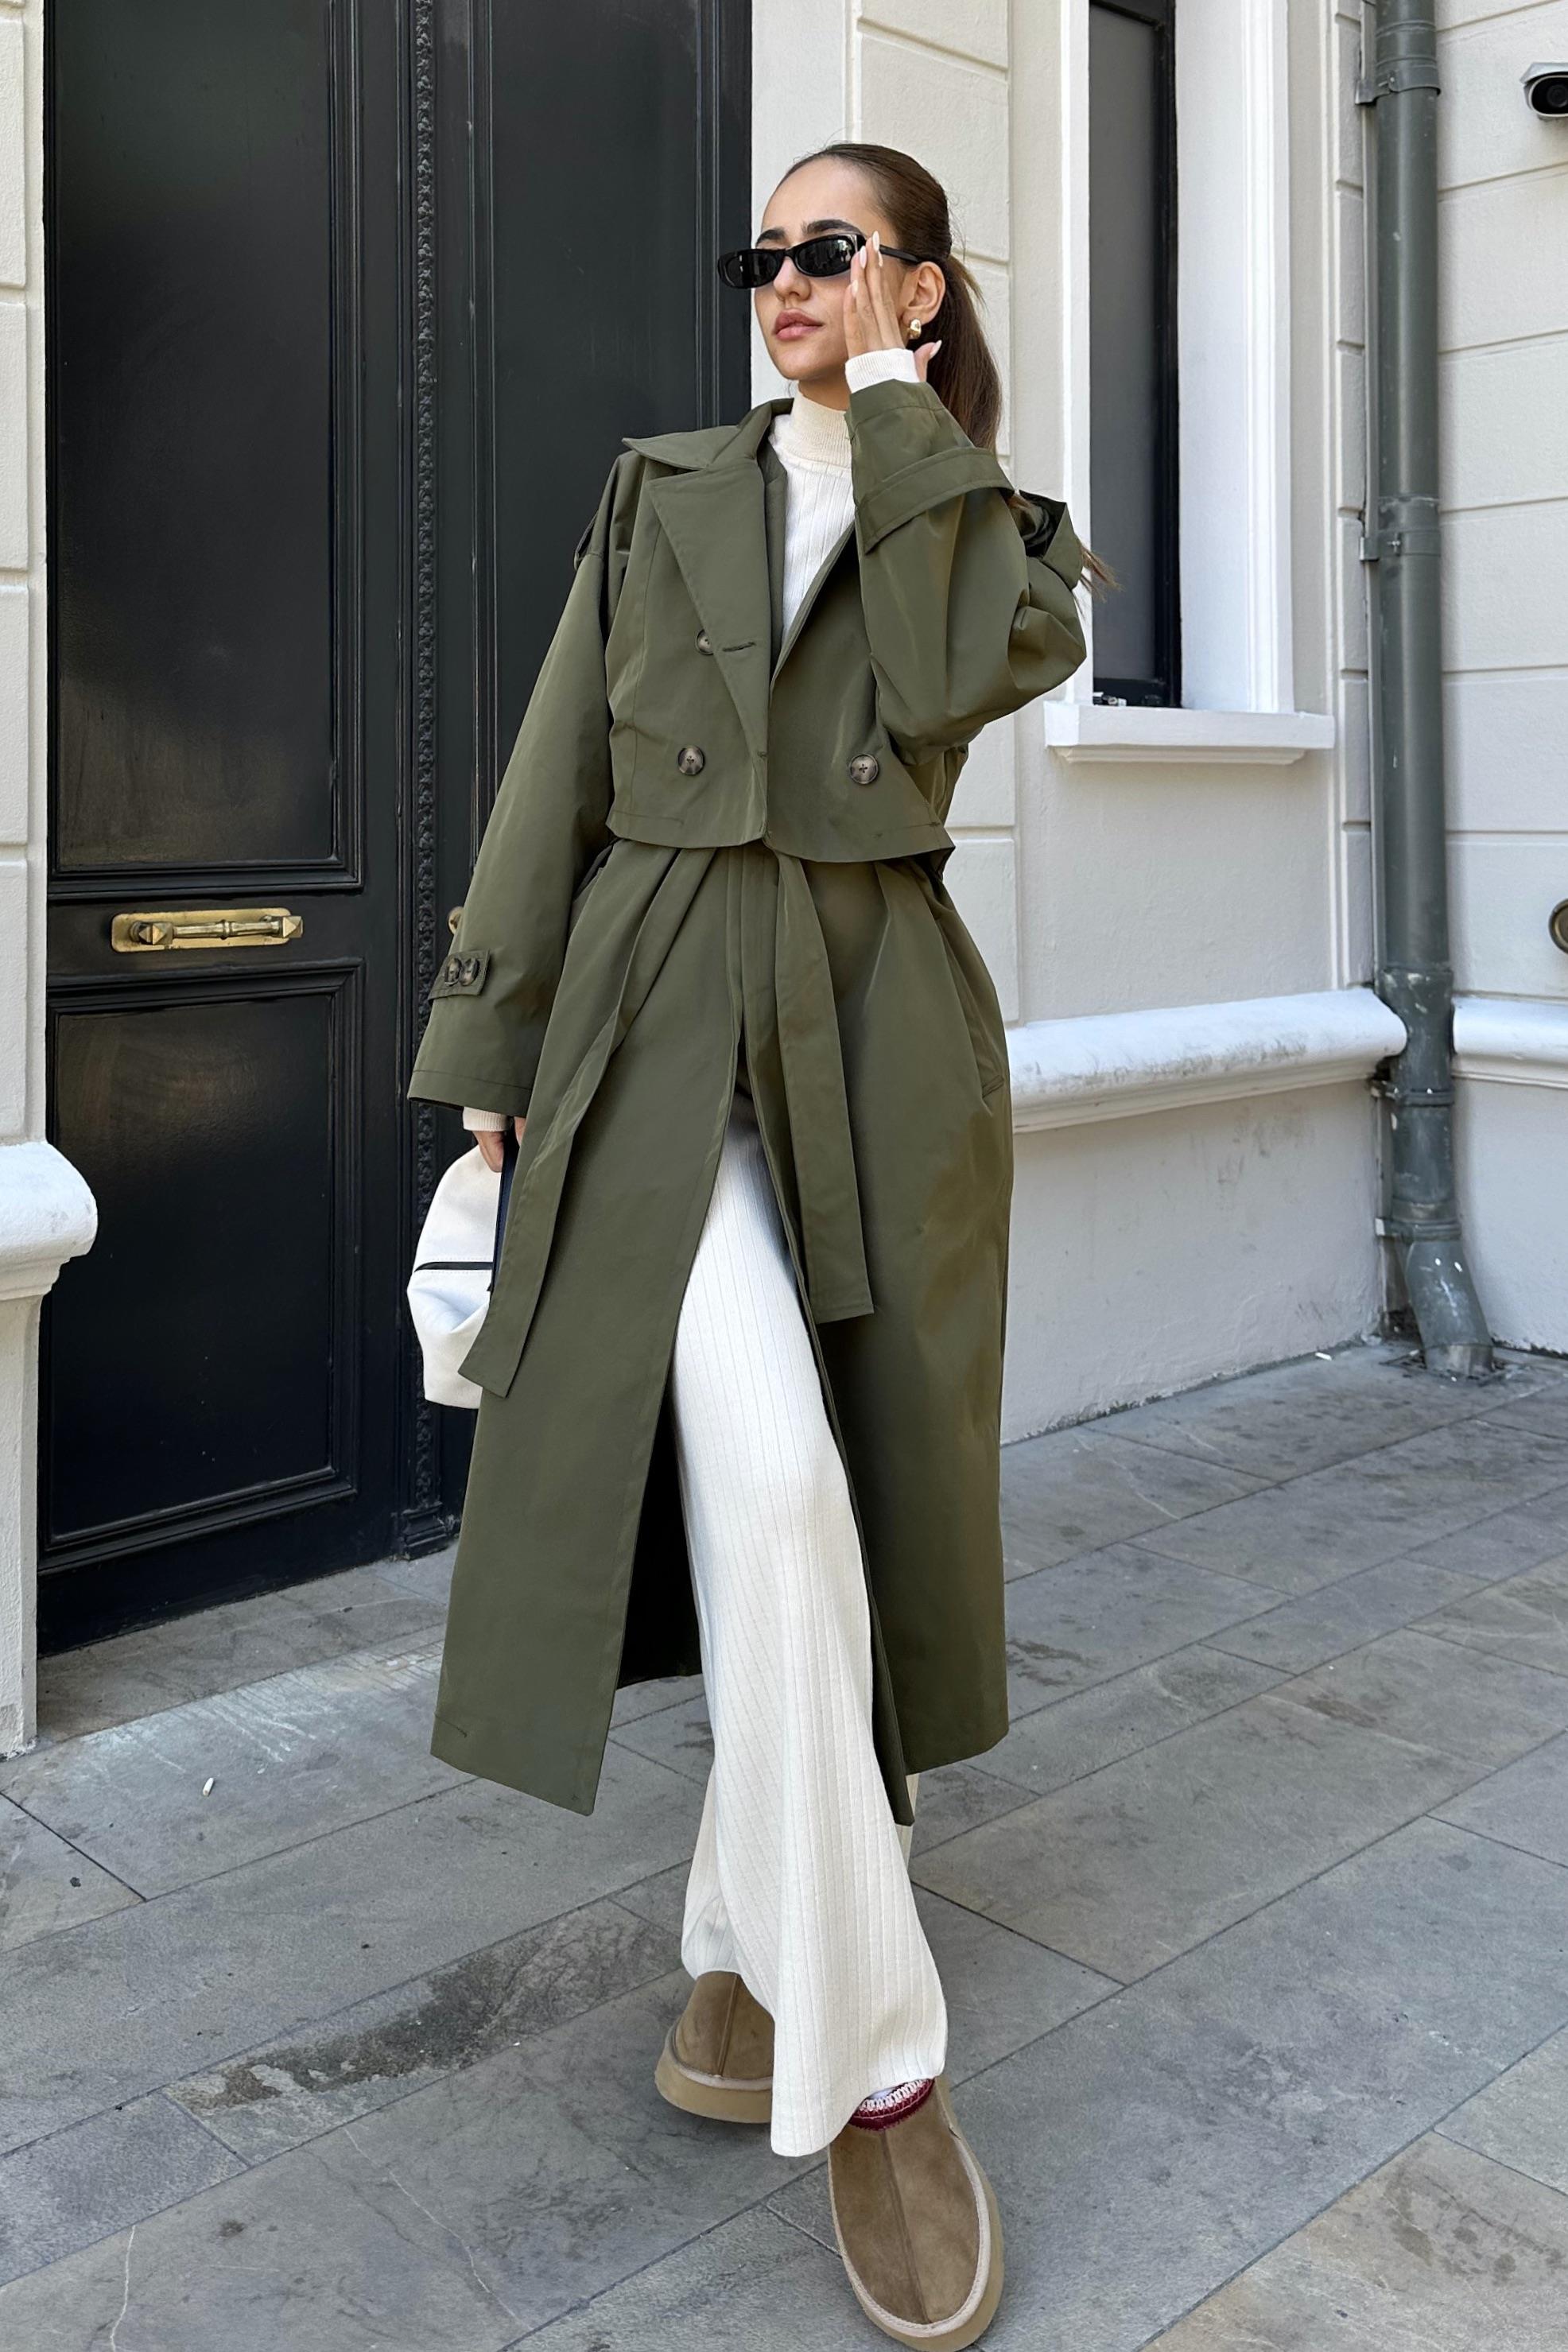 Nazliye Green Design Trench Coat - Women's Trench Coats - Nazliye Moda |  Women Apparel Fashion